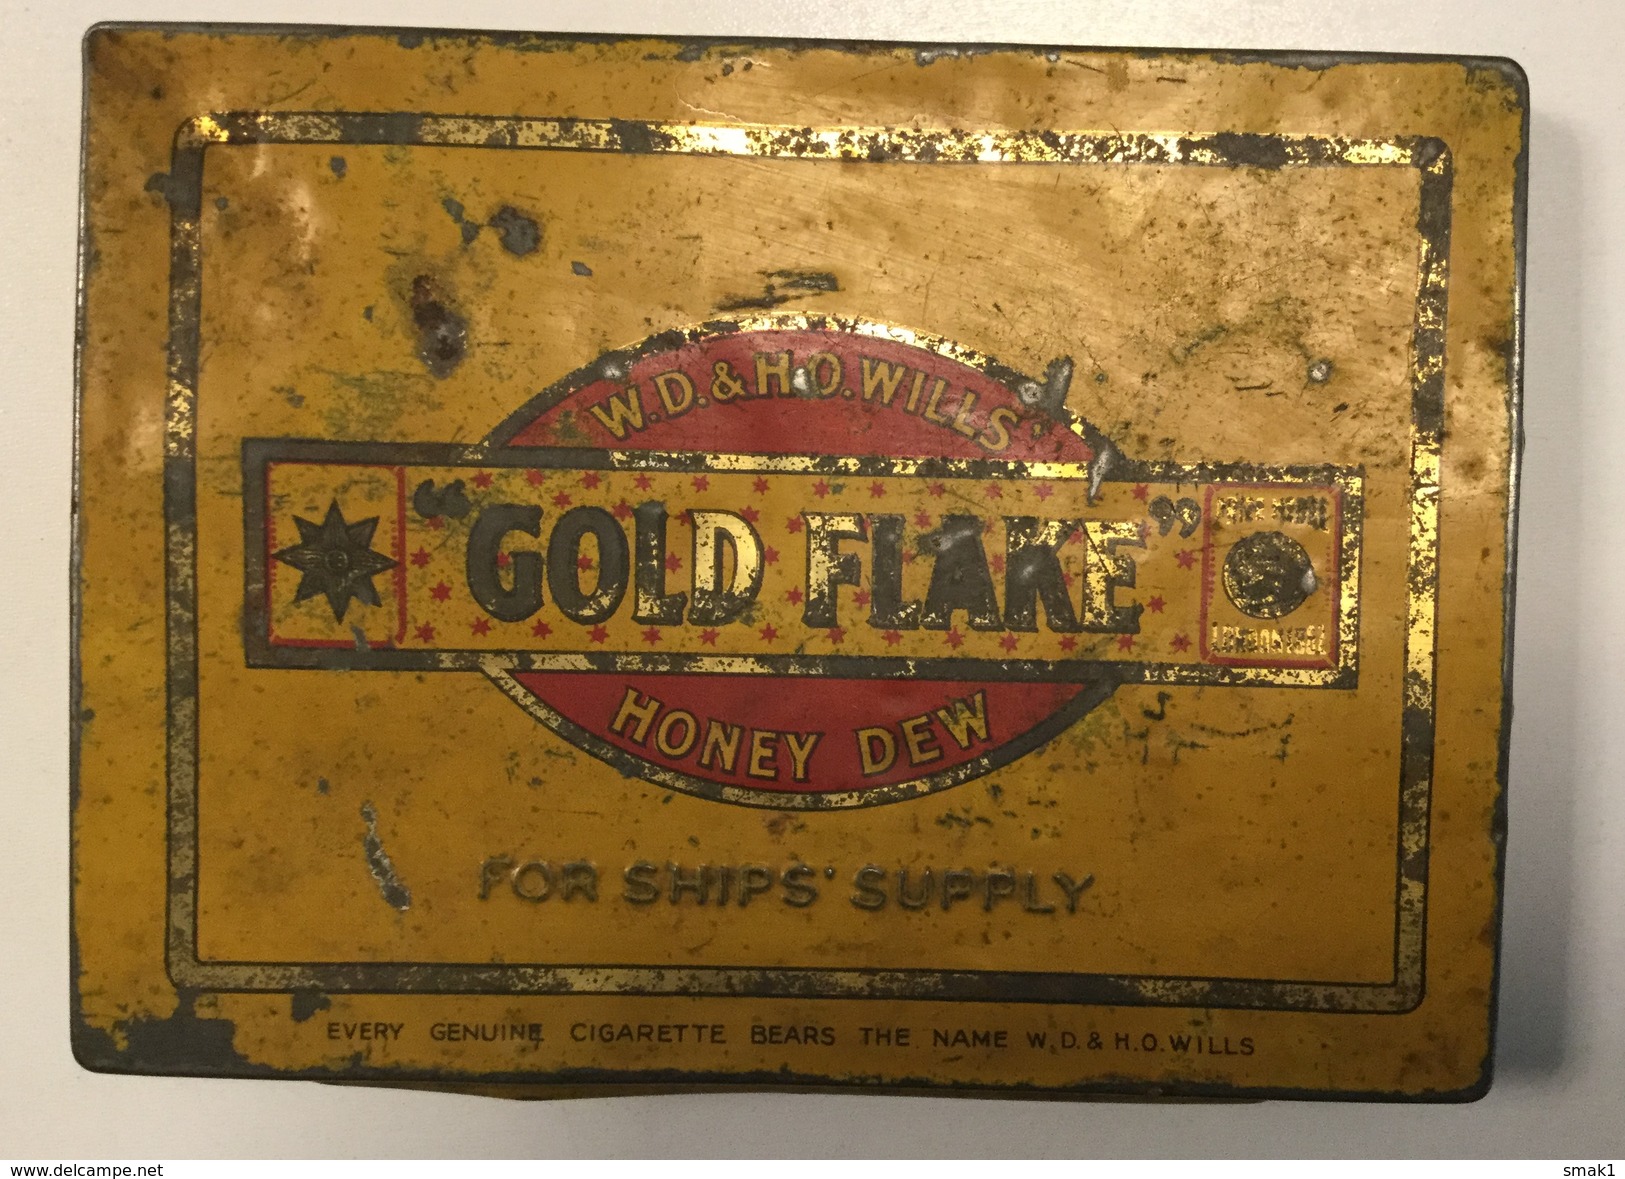 EMPTY  TOBACCO  BOX    TIN     GOLD FLAKE   W.D. & H.O. WILLS  HONEY DEW - Boites à Tabac Vides